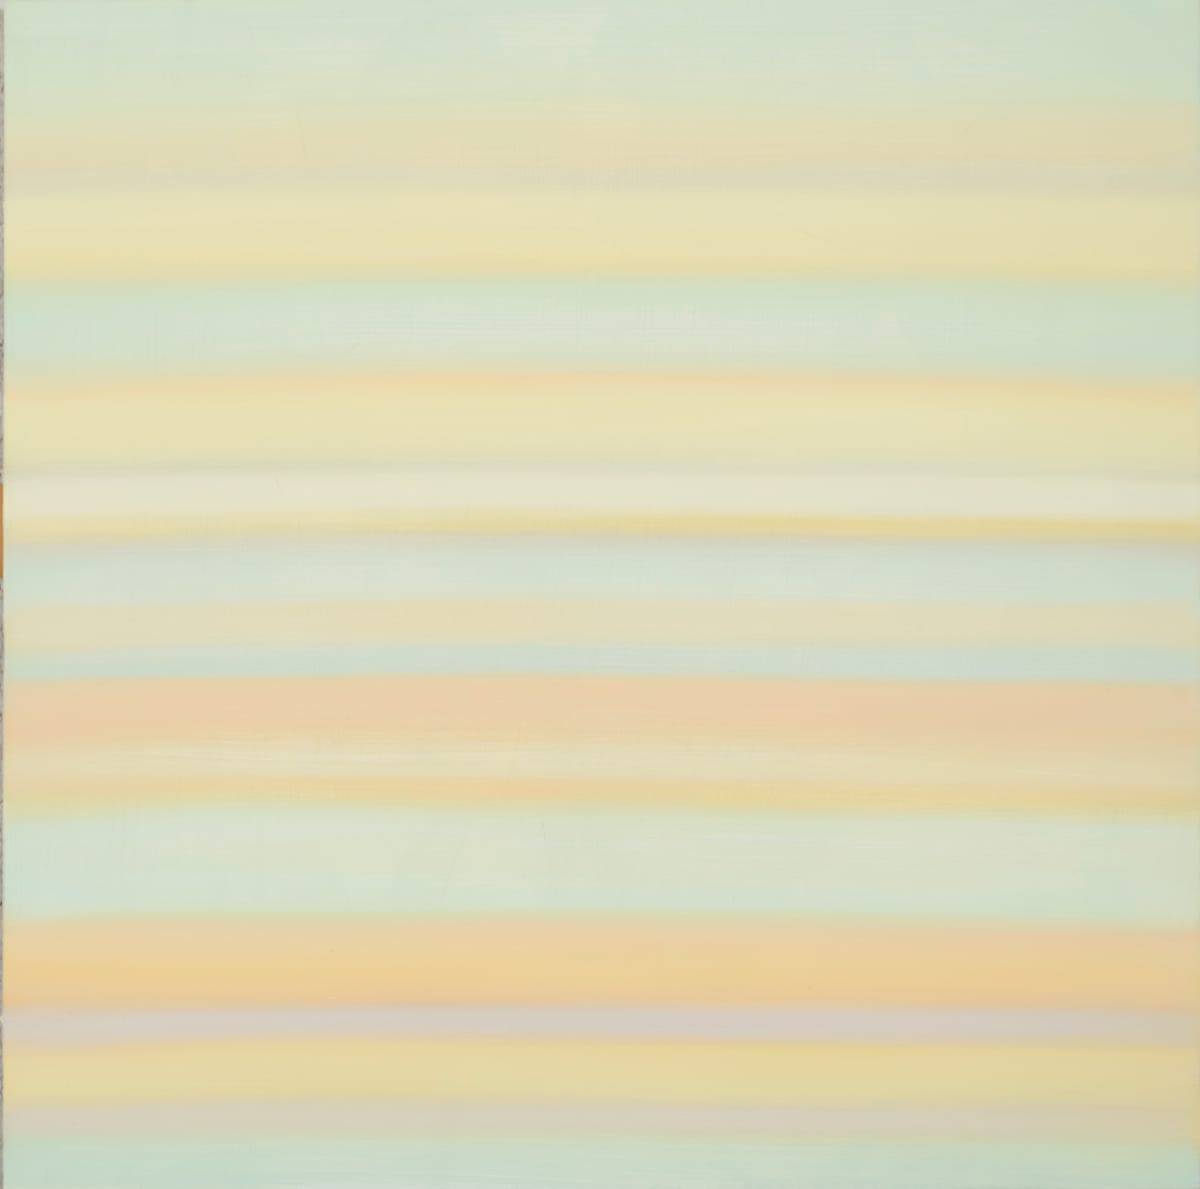 Cloud Stripe no 1 by Shawn Demarest 